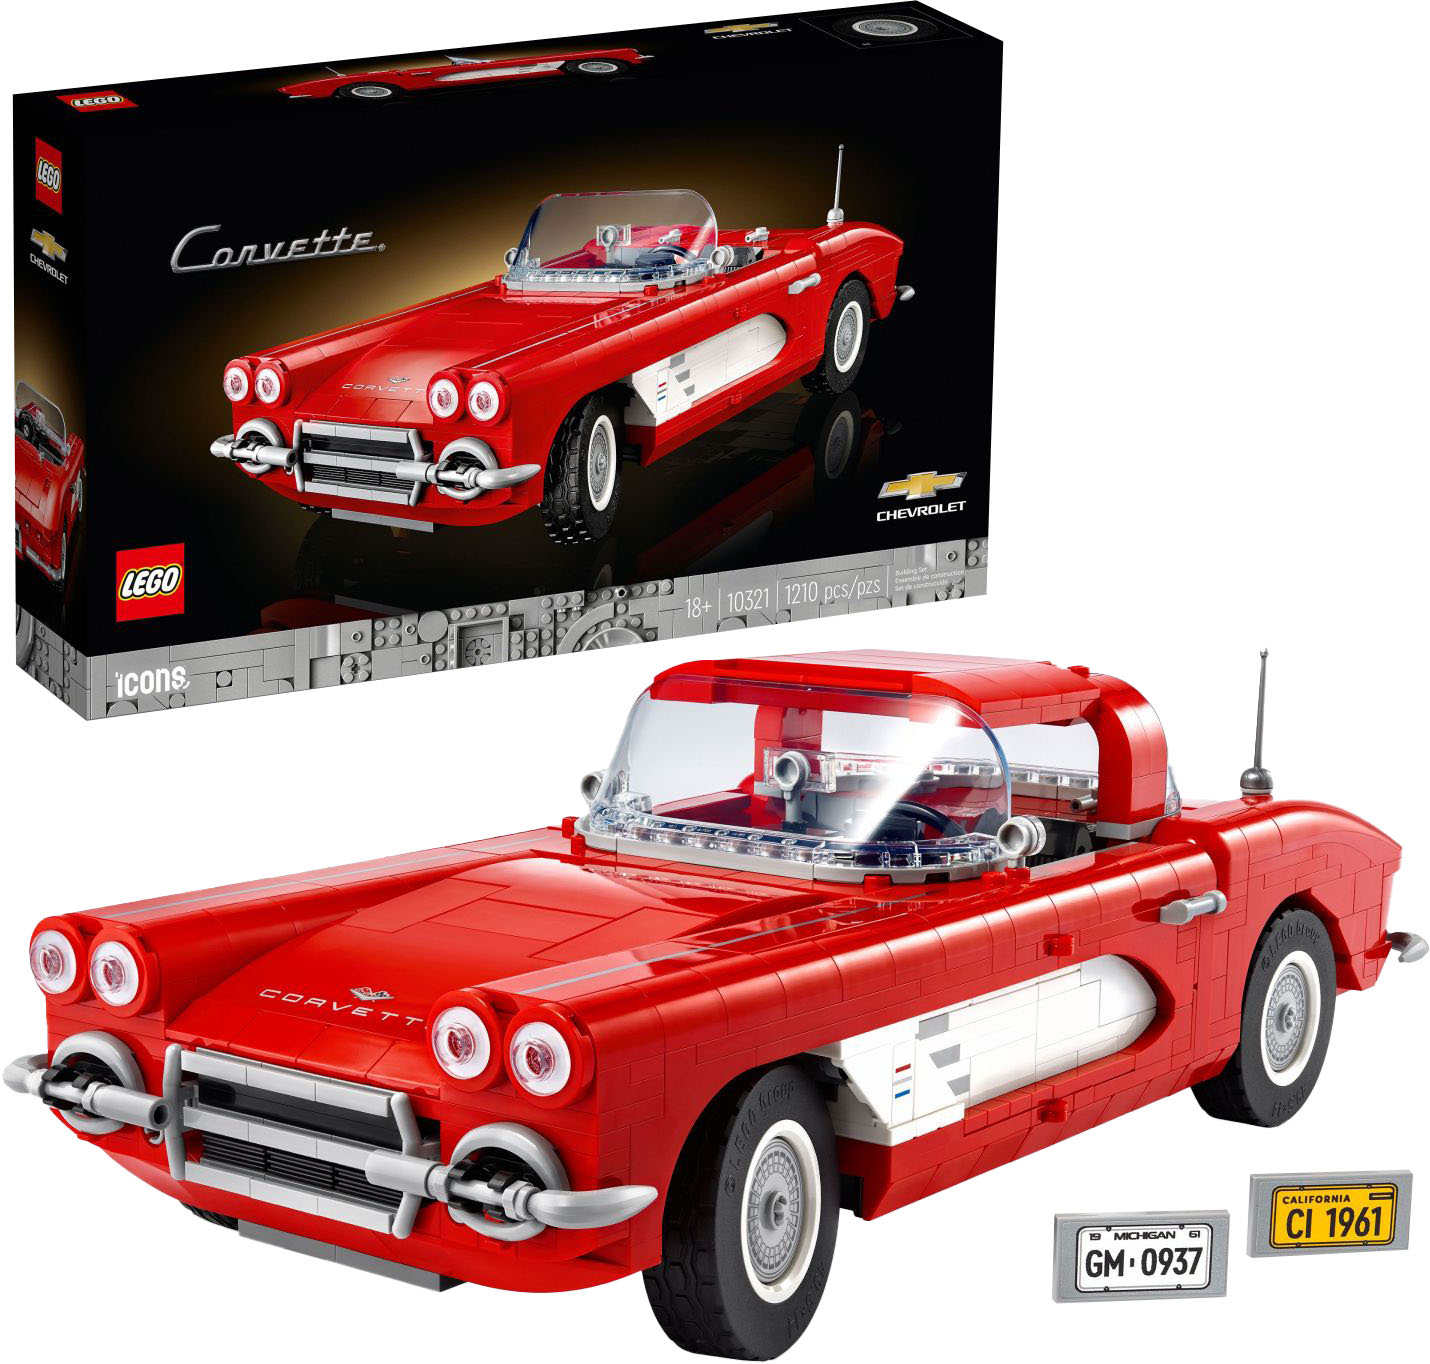 LEGO Icons Corvette Classic Car Model Building Kit 10321 6426512 - Best Buy